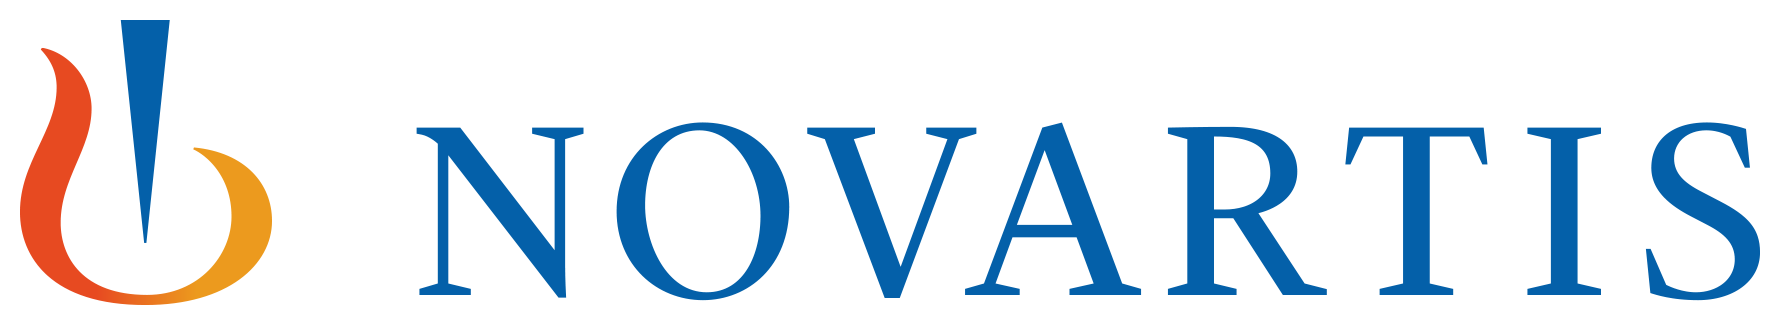 FreeNovation logo